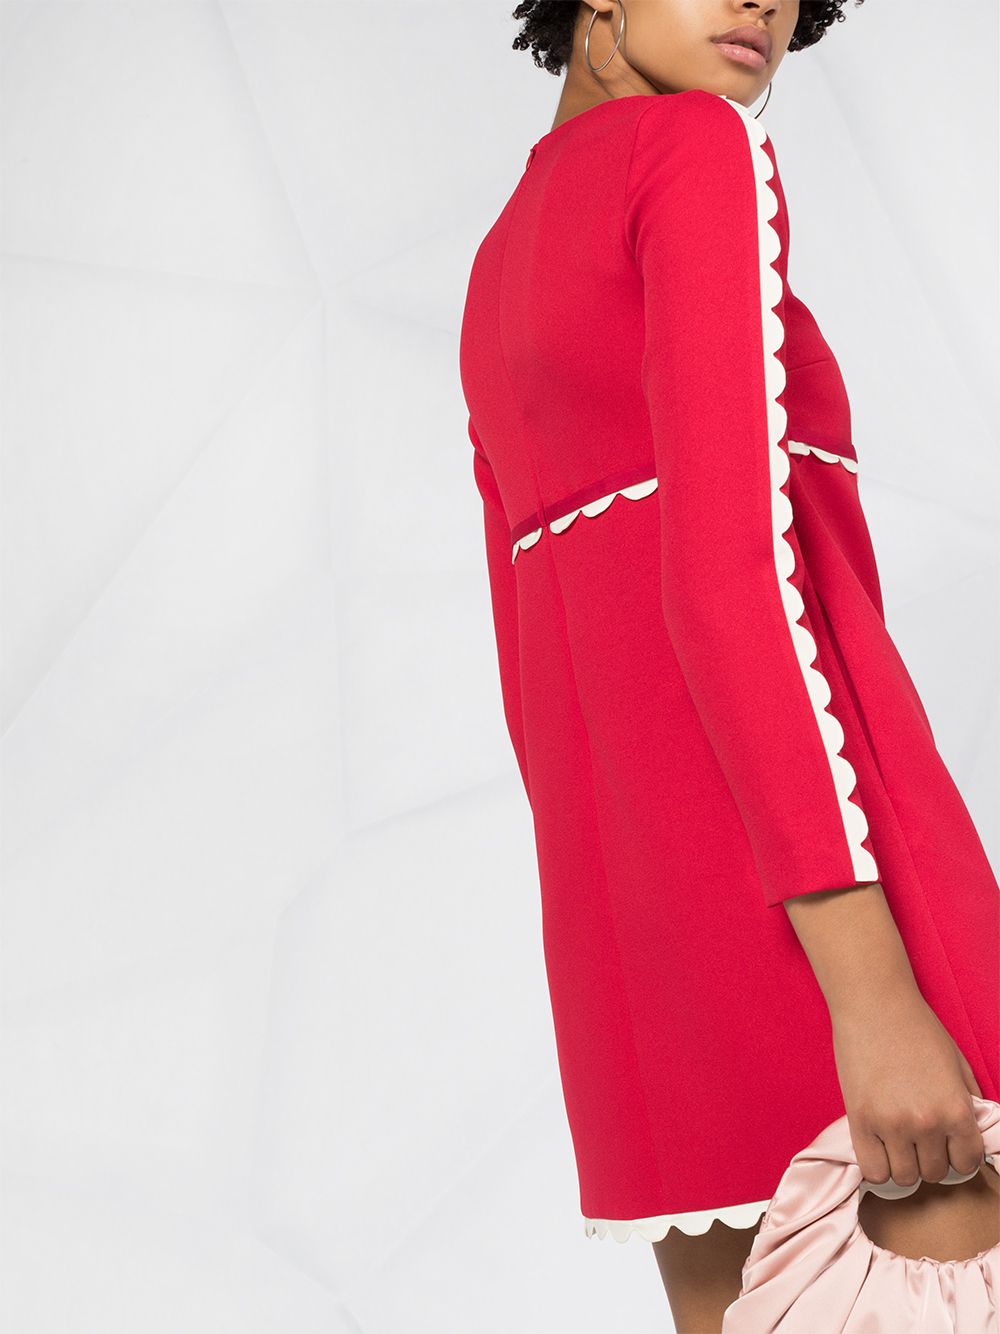 Louis Vuitton Scallop Detail A-Line Dress Bright Red. Size 36